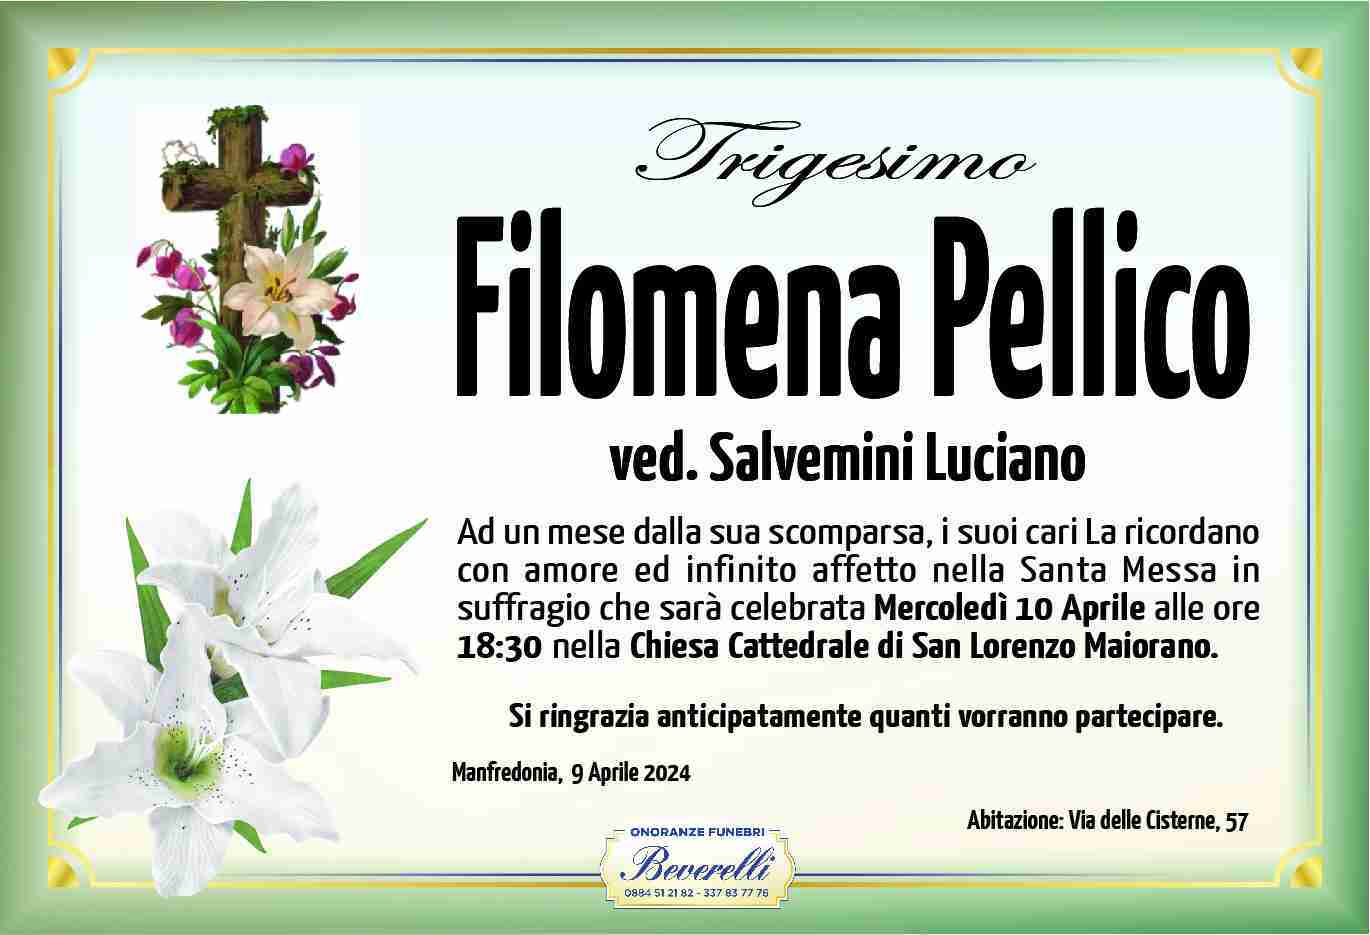 Filomena Pellico